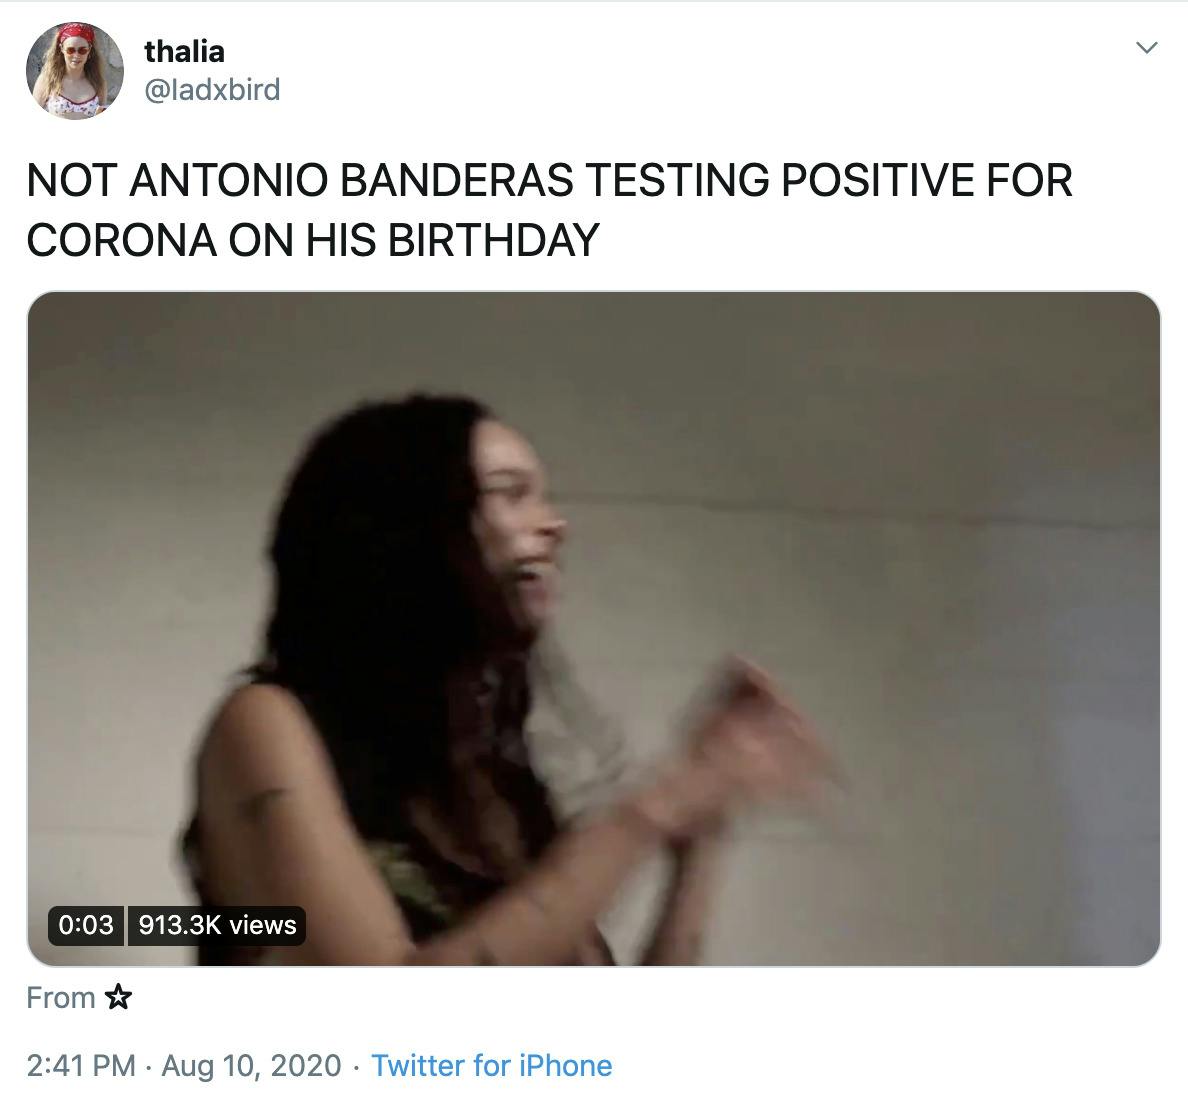 "NOT ANTONIO BANDERAS TESTING POSITIVE FOR CORONA ON HIS BIRTHDAY" gif of angry crying black woman